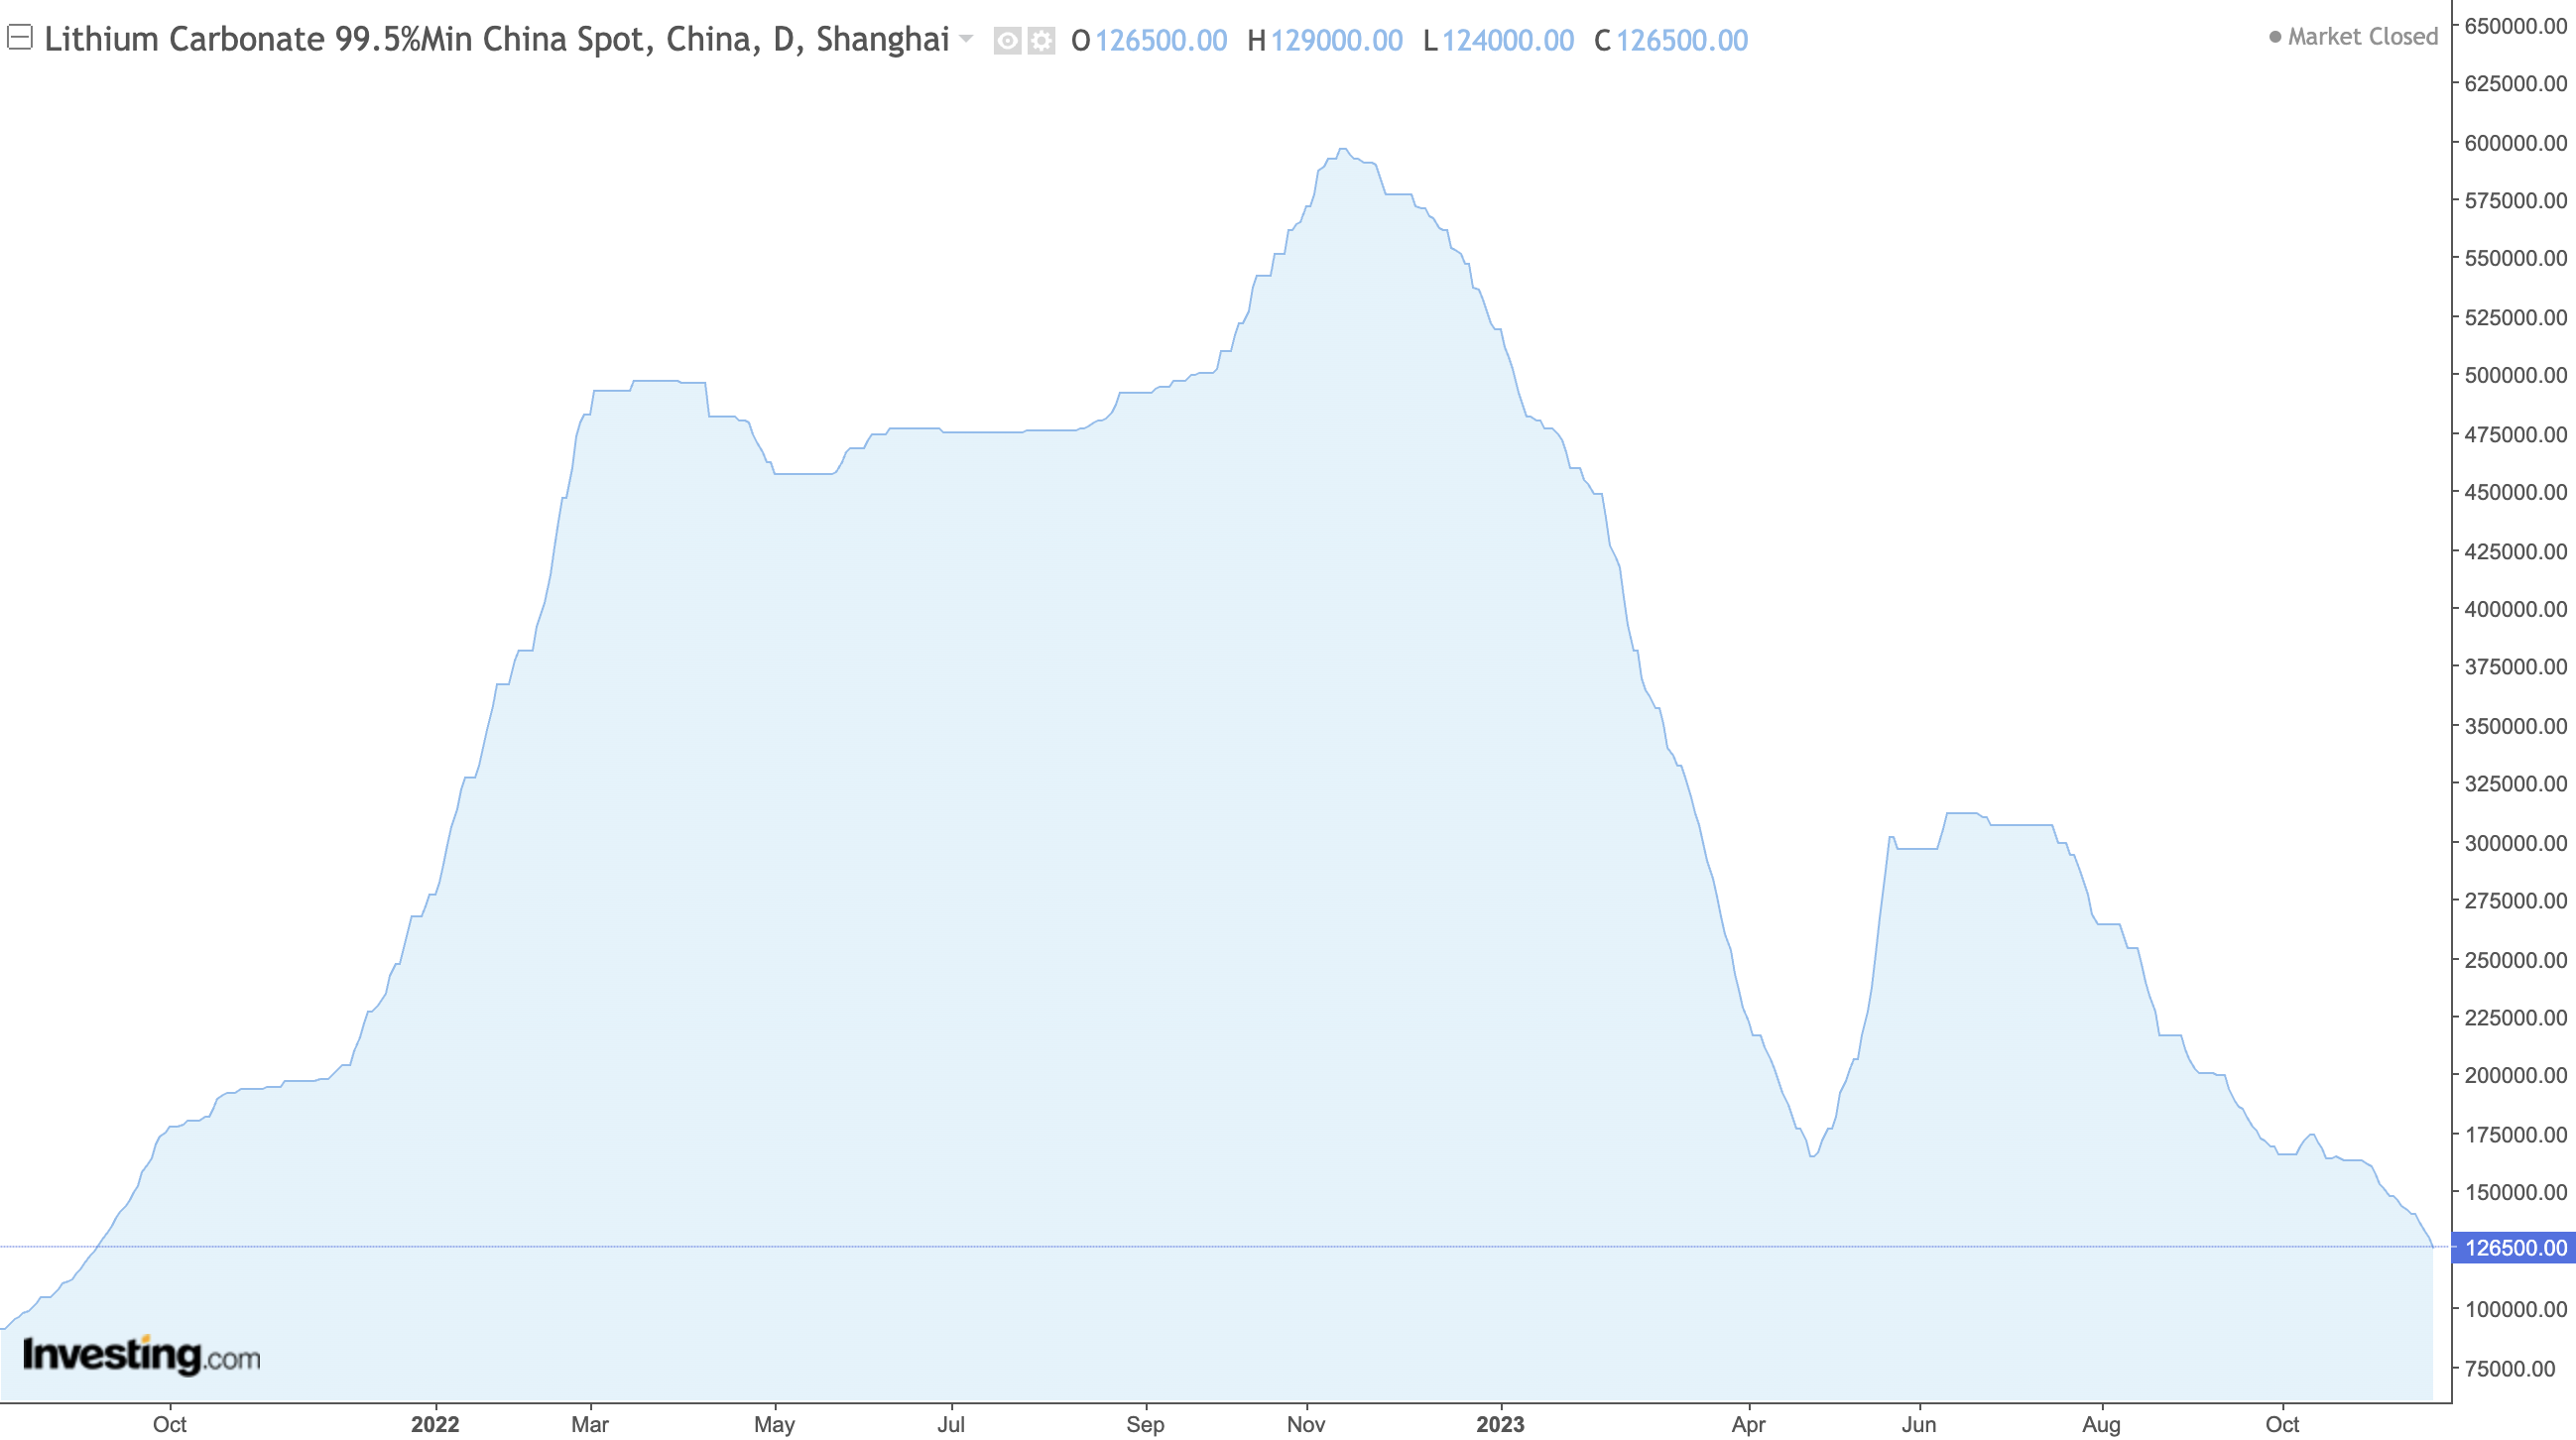 China lithium carbonate 99.5% spot price chart